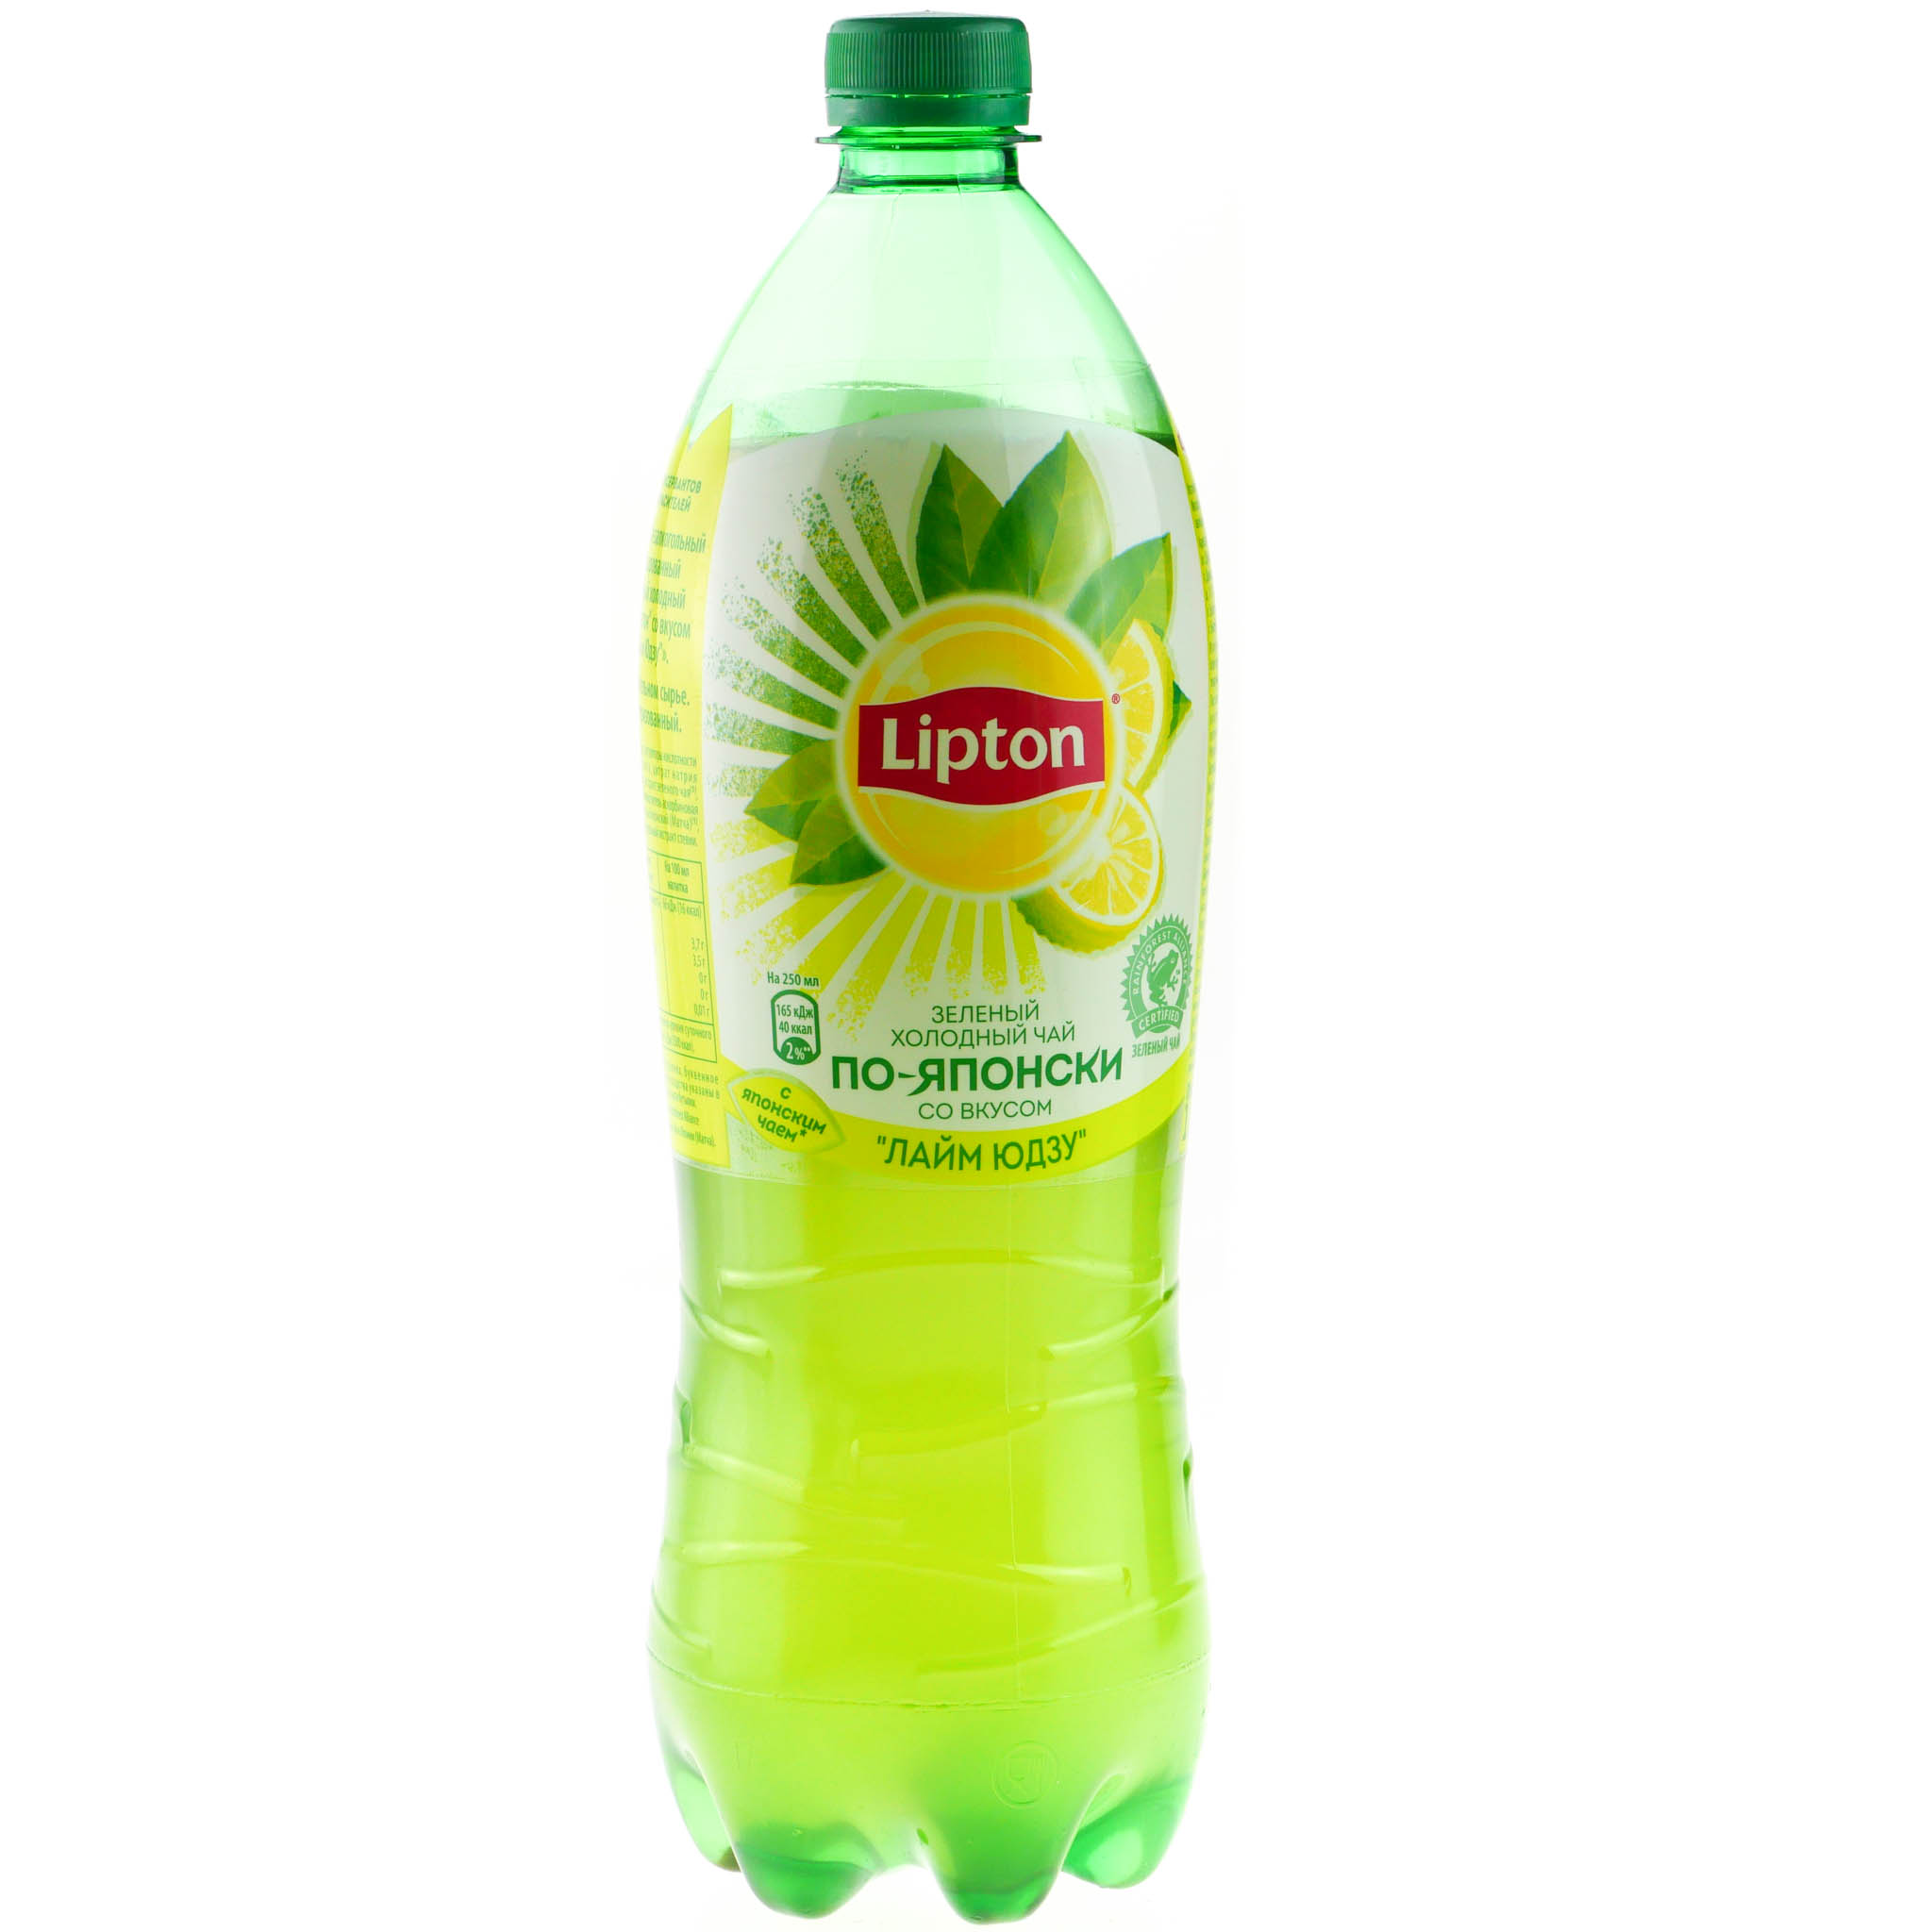 Бутылка зеленого липтона. Липтон зеленый чай 1л. Липтон зеленый 1 литр. Чай Липтон холодный зеленый 1л. Липтон зелёный холодный чай 1 литр.